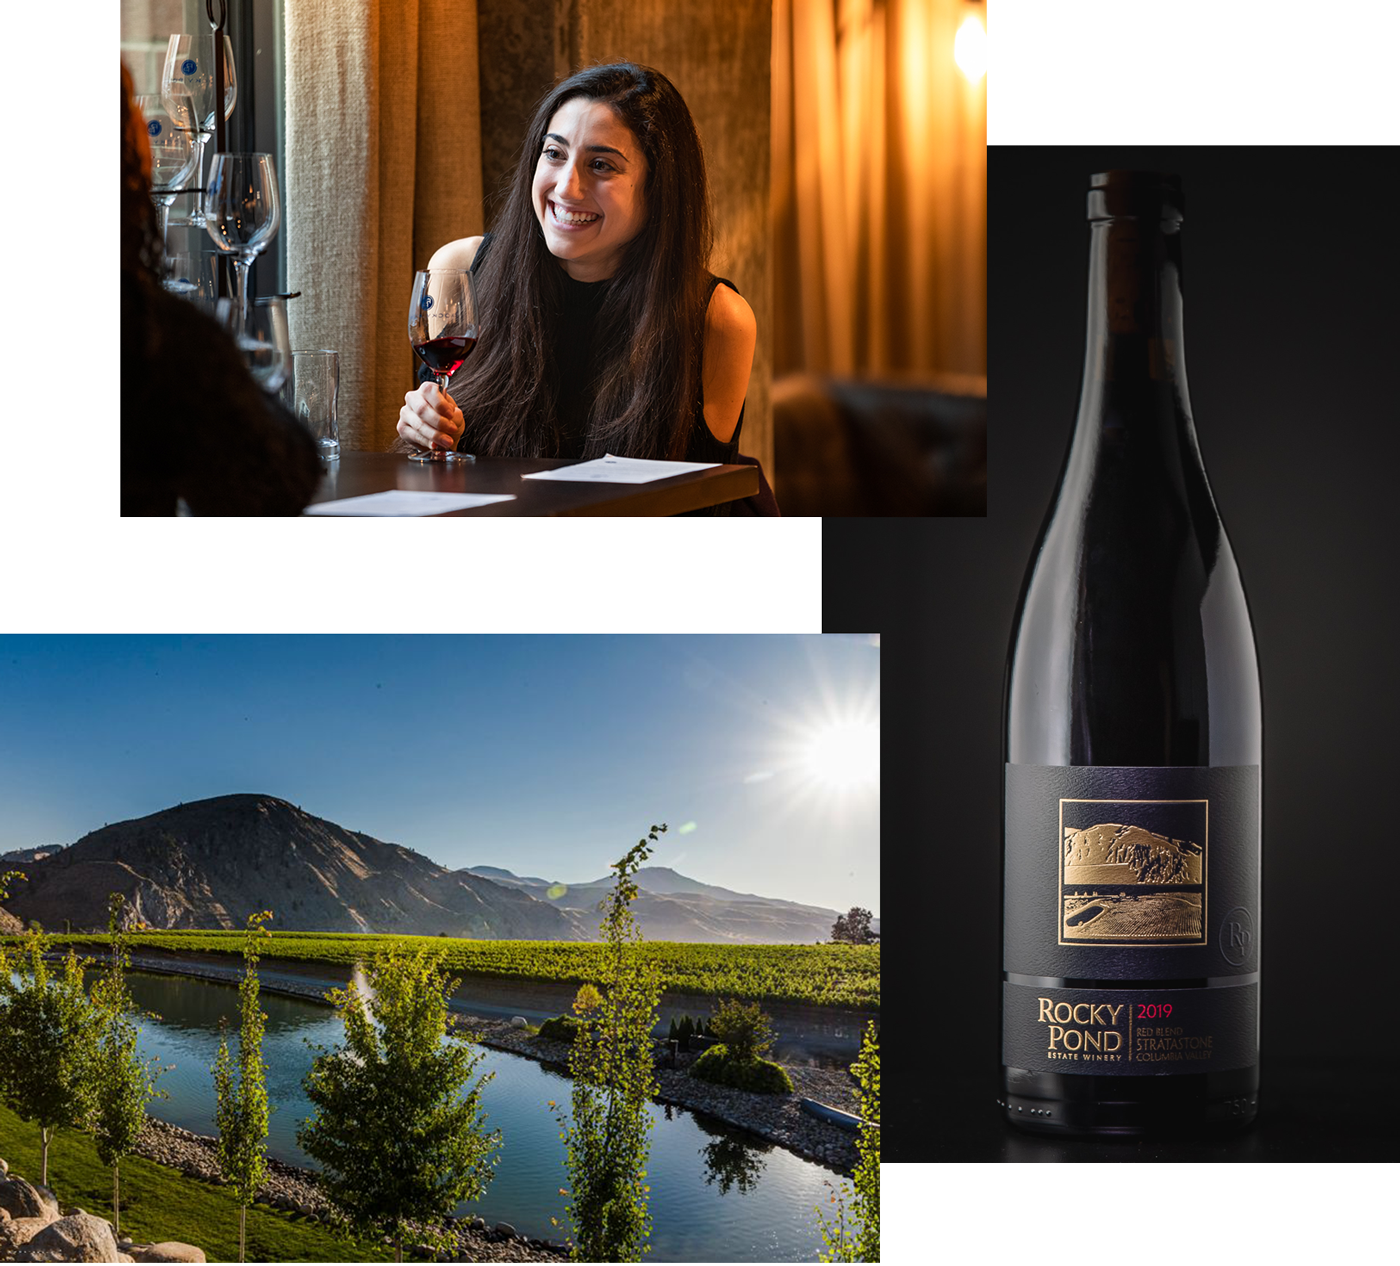 Rocky Pond bottle, vineyards, and guest enjoying wine